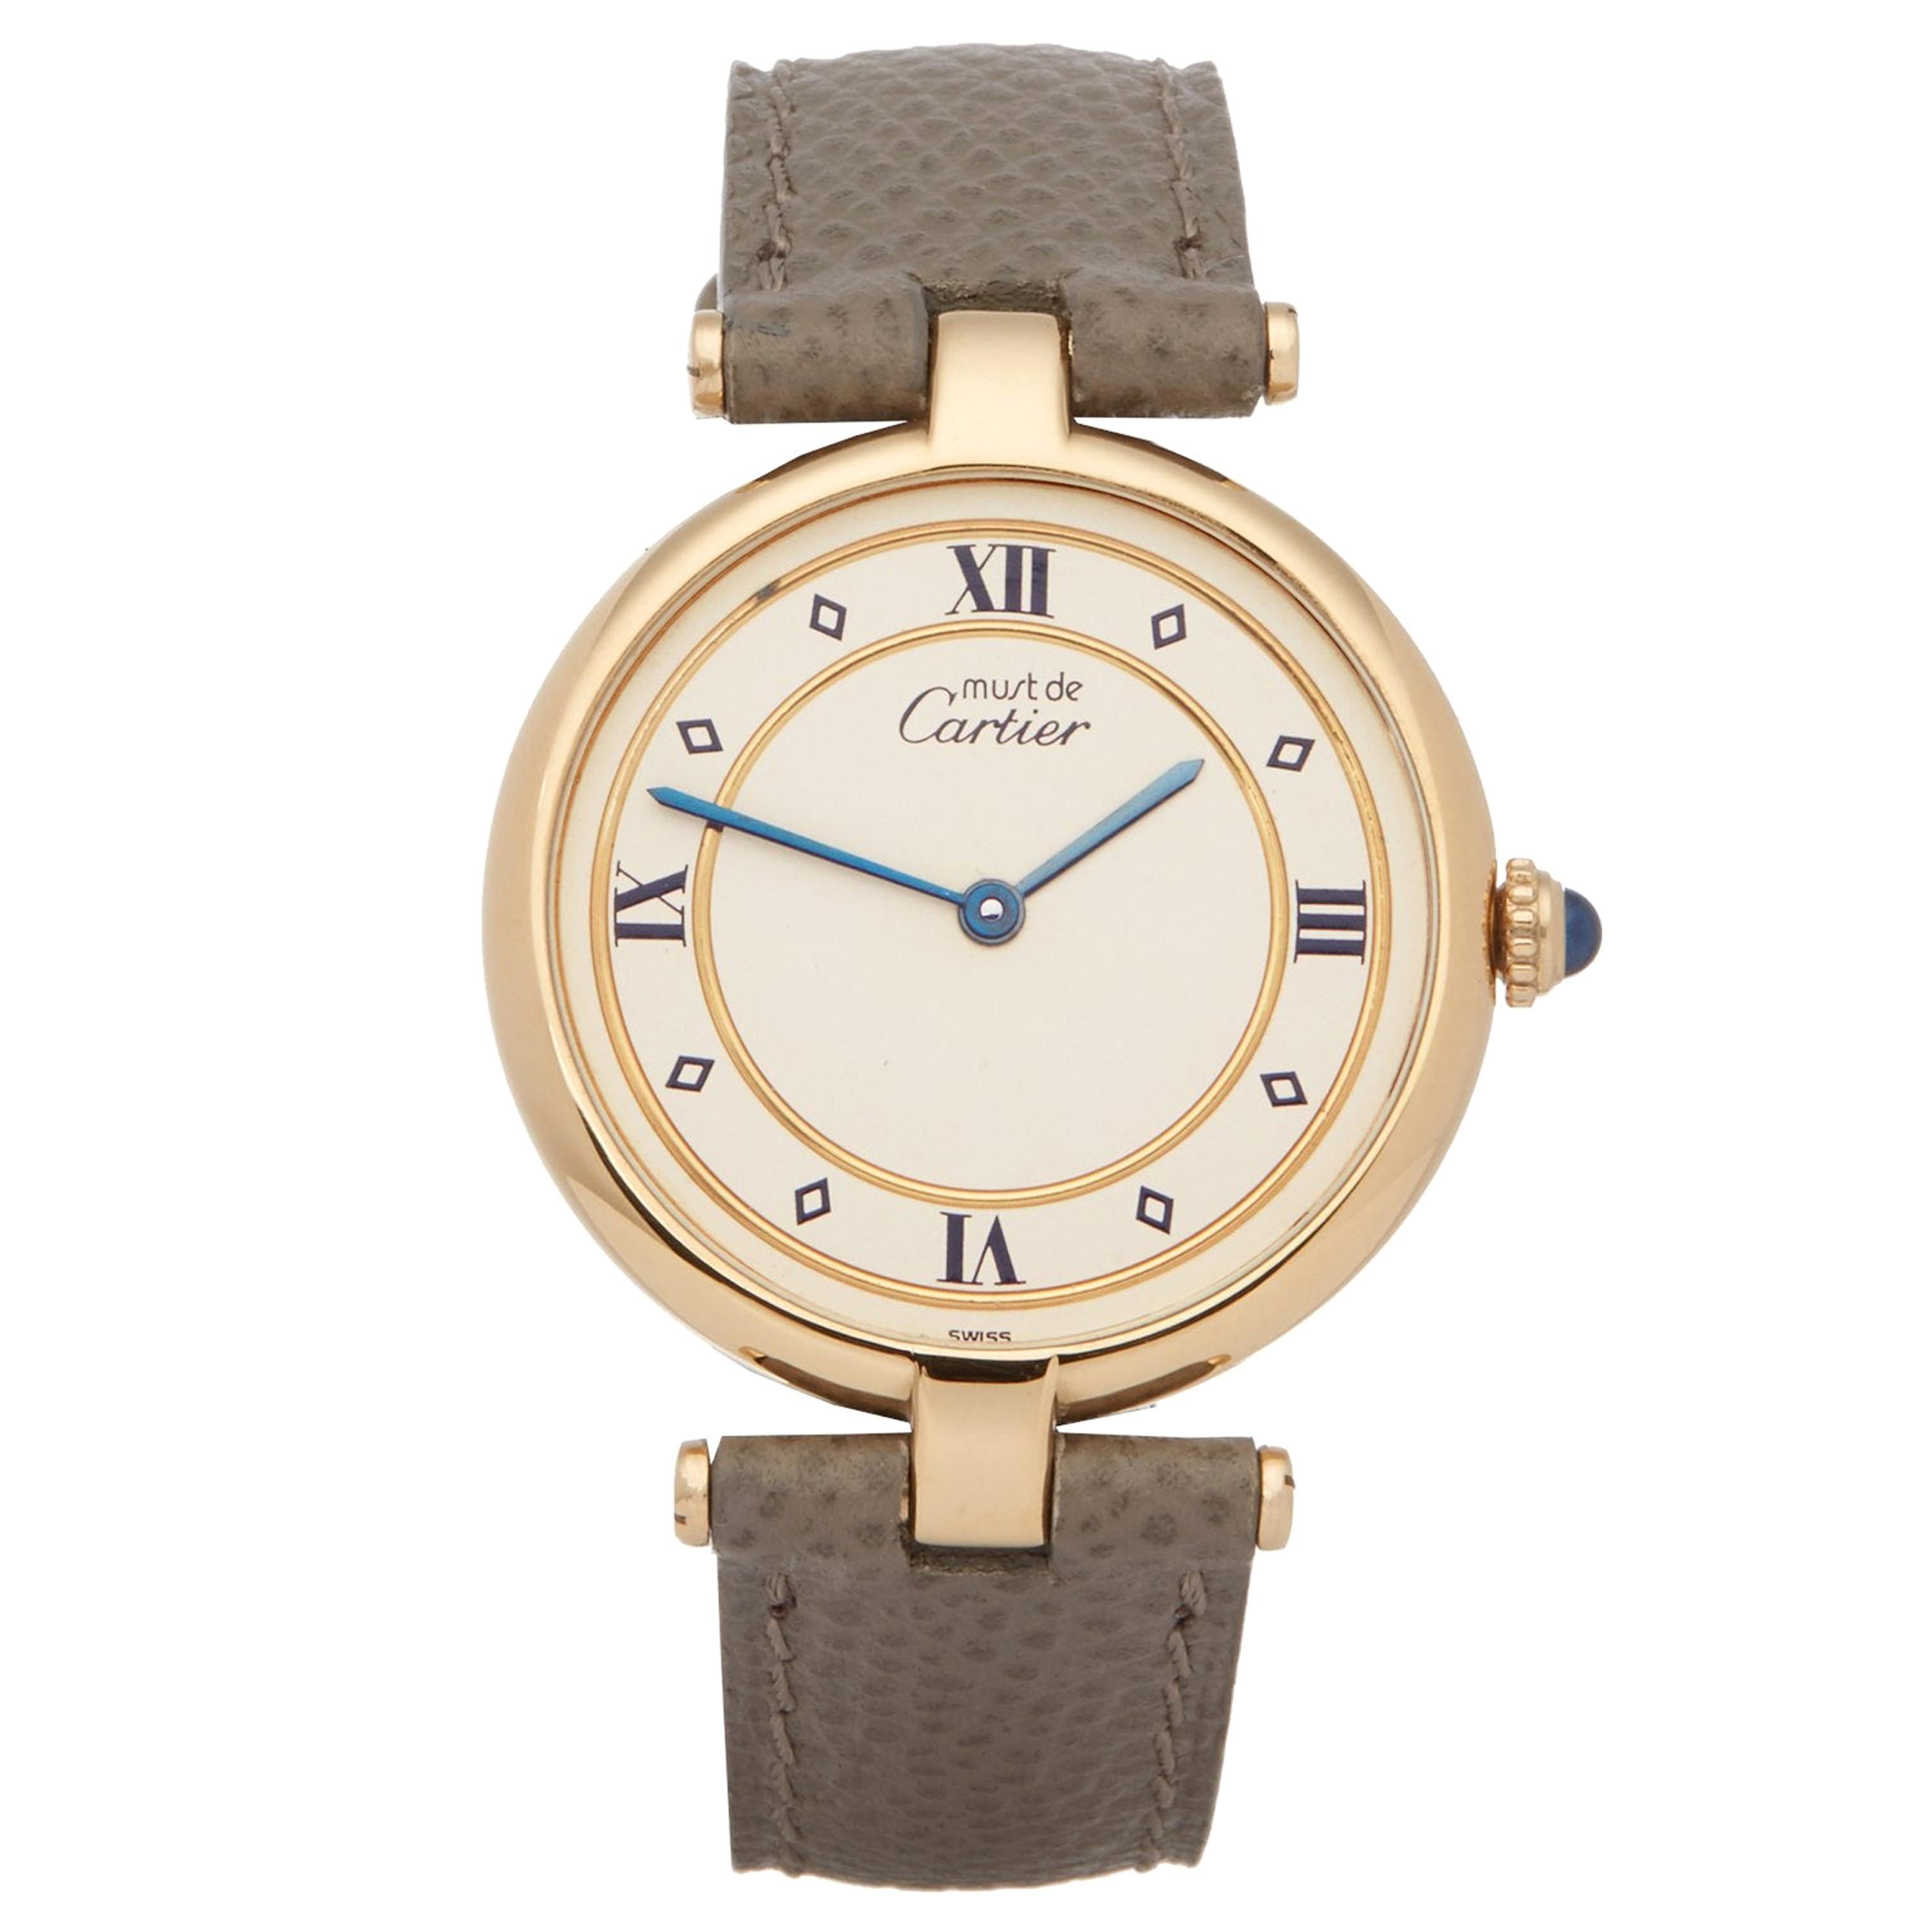 Cartier Must de Cartier Ronde 101958 Ladies Gold-Plated Watch